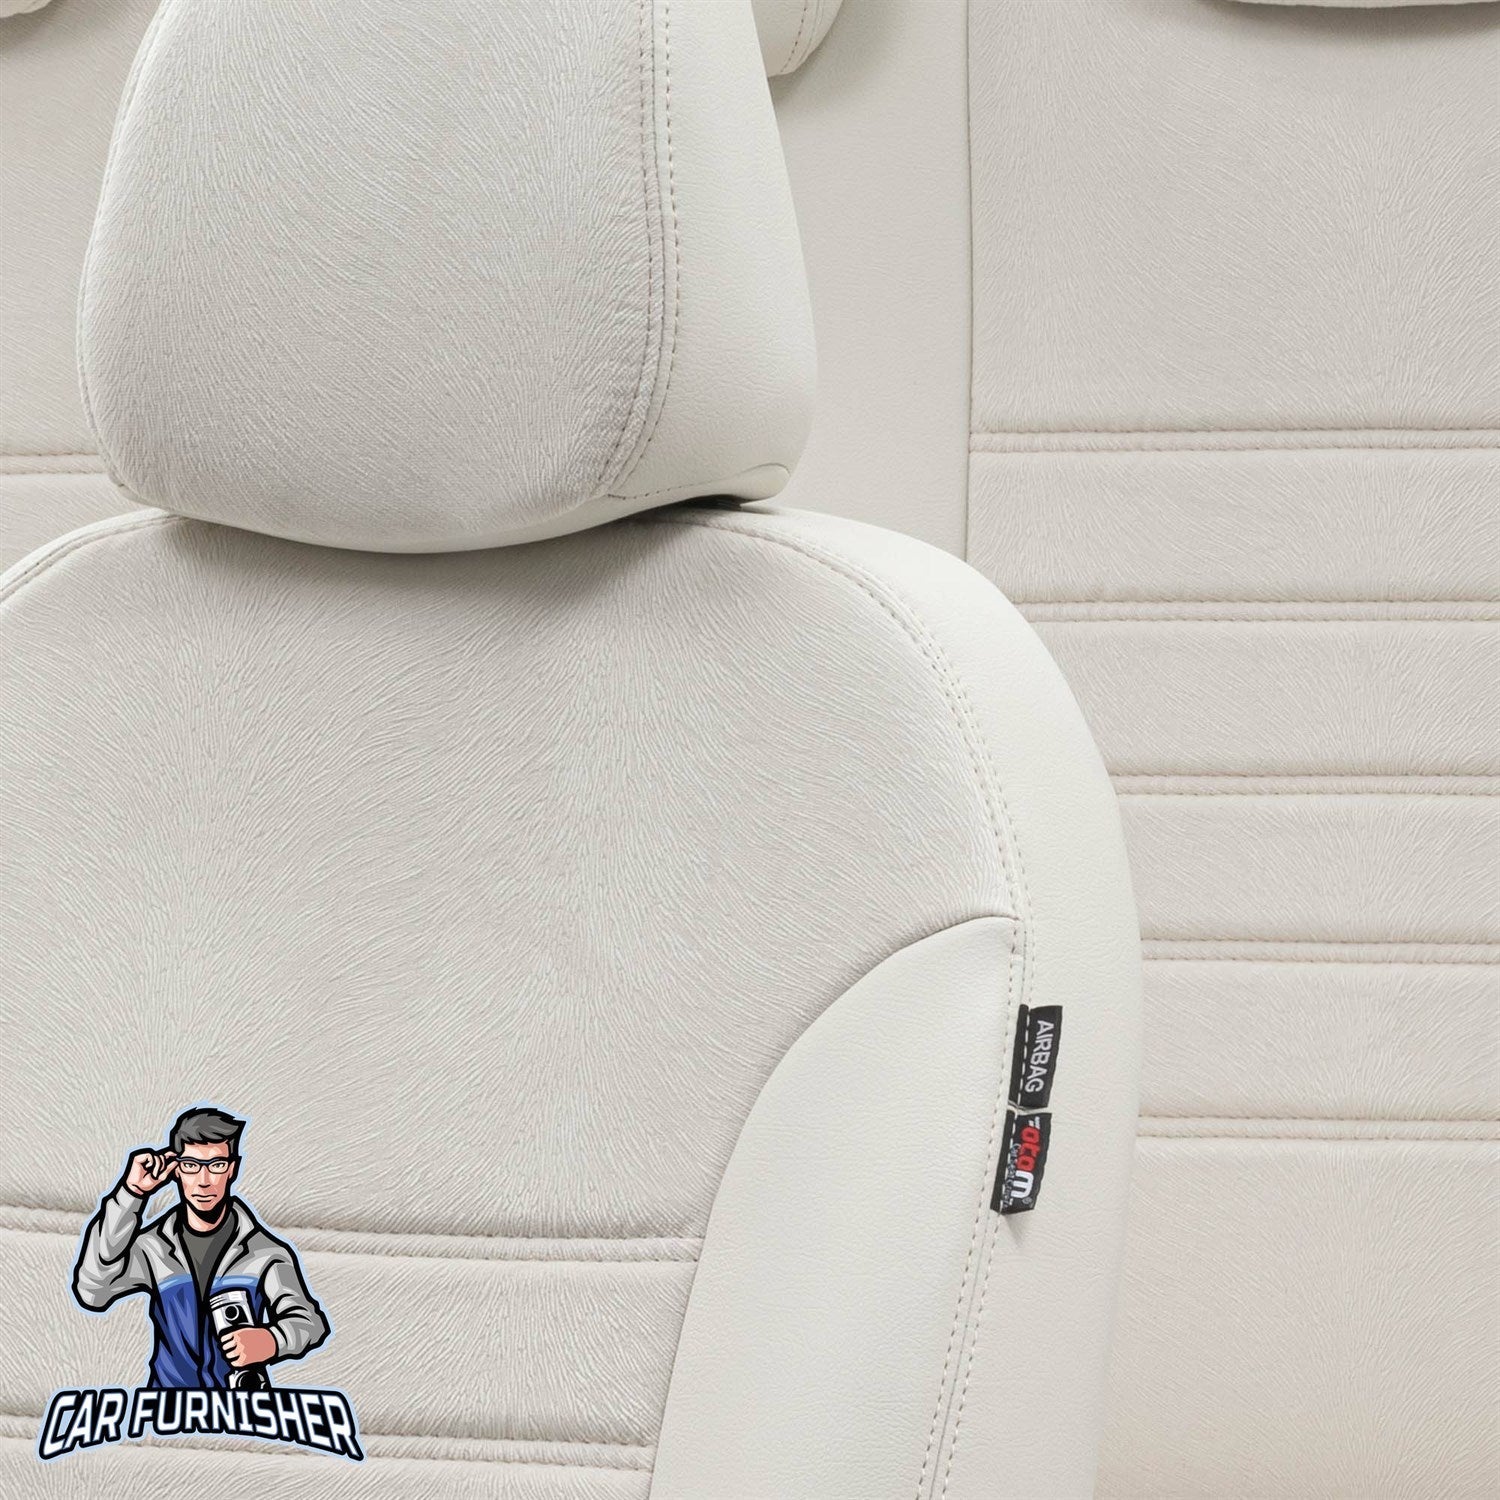 Chevrolet Rezzo Car Seat Covers 2004-2008 CDX/U100 London Design Ivory Full Set (5 Seats + Handrest) Leather & Fabric